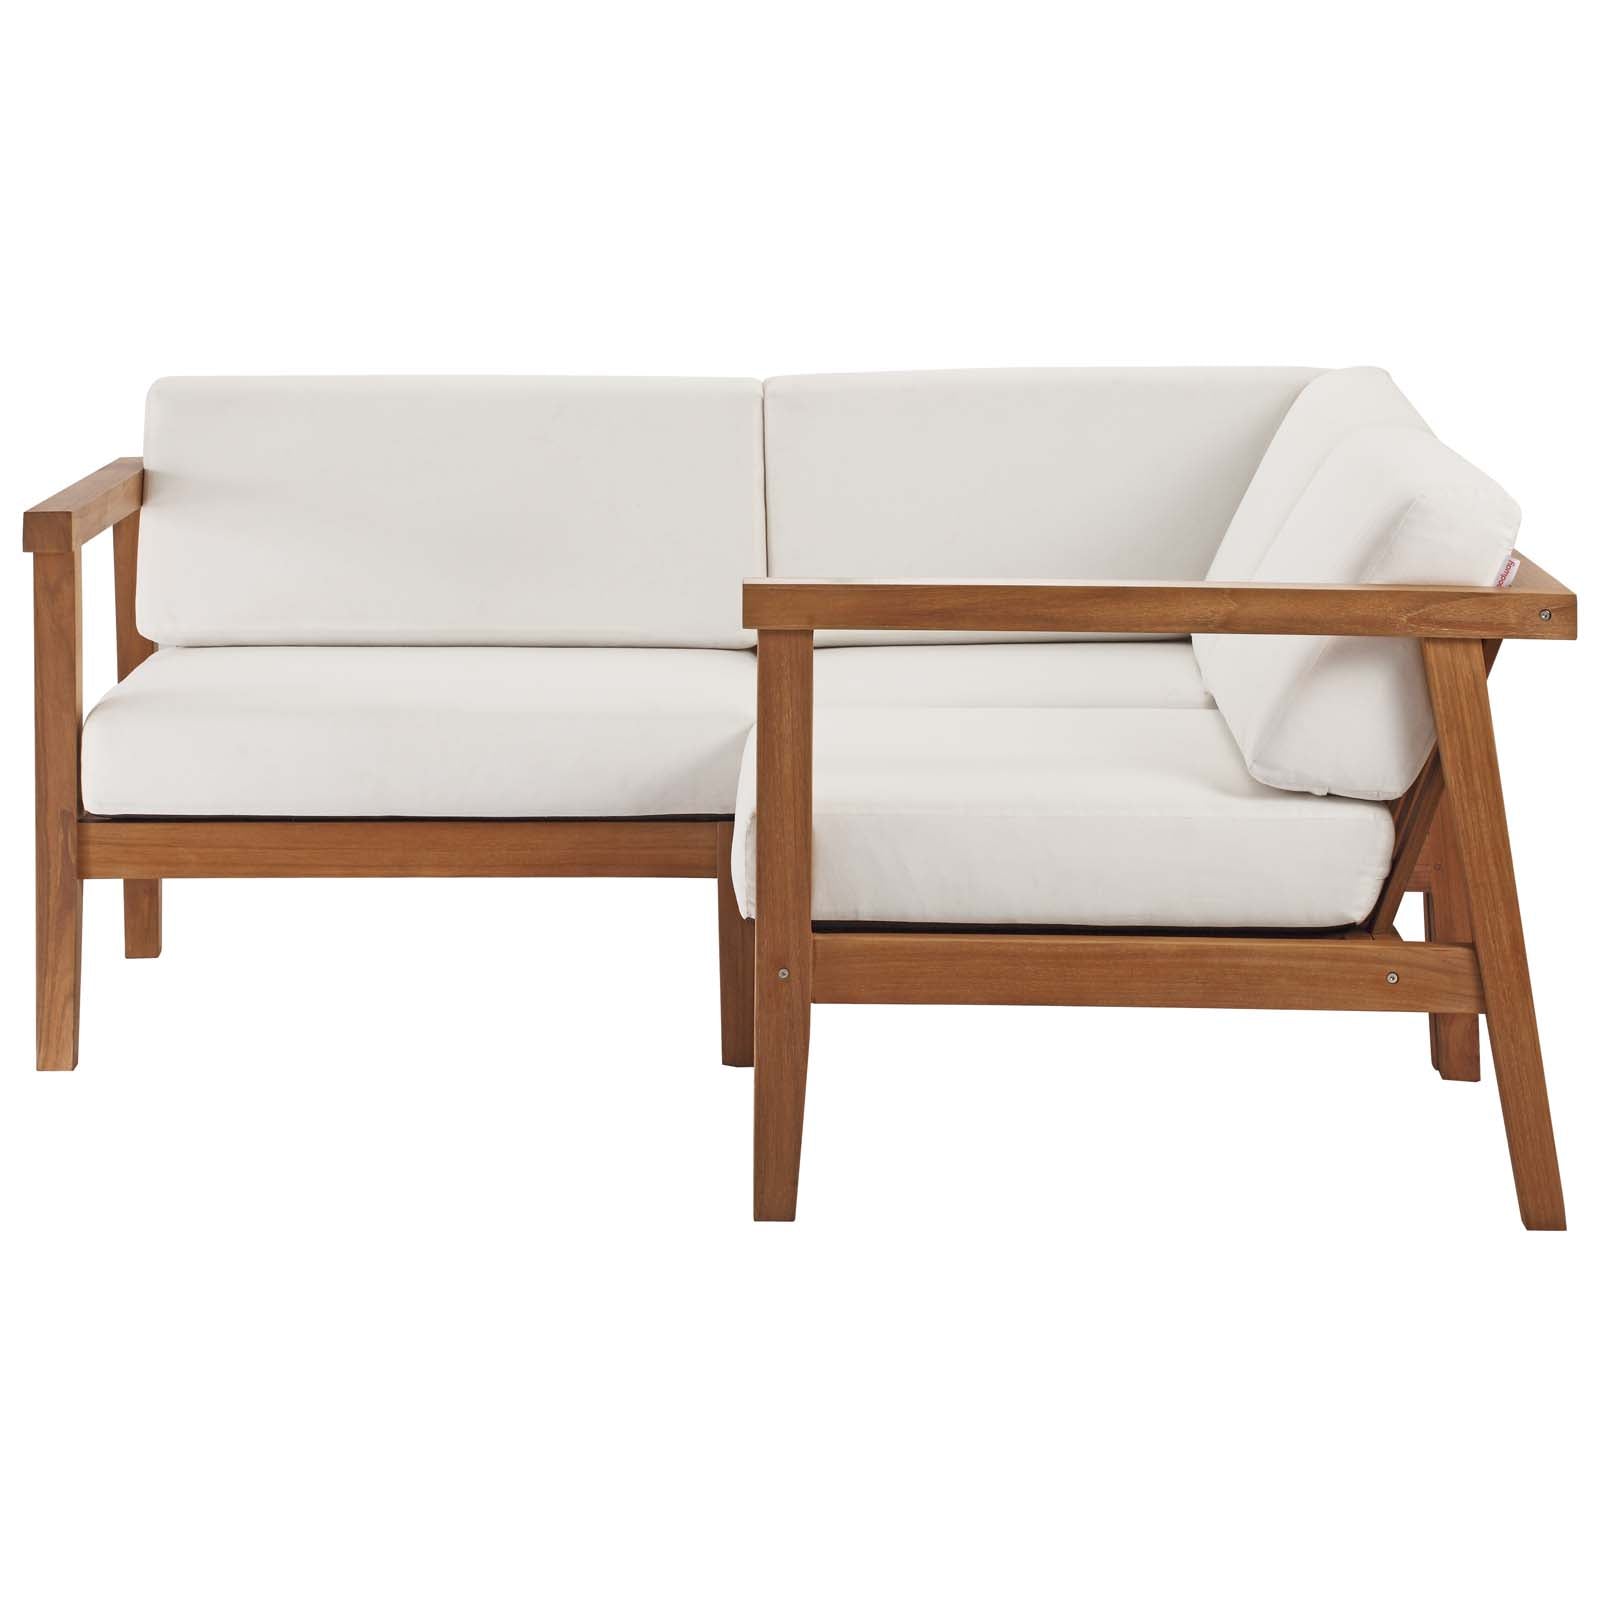 Bayport Outdoor Patio Teak Wood 3-Piece Sectional Sofa Set